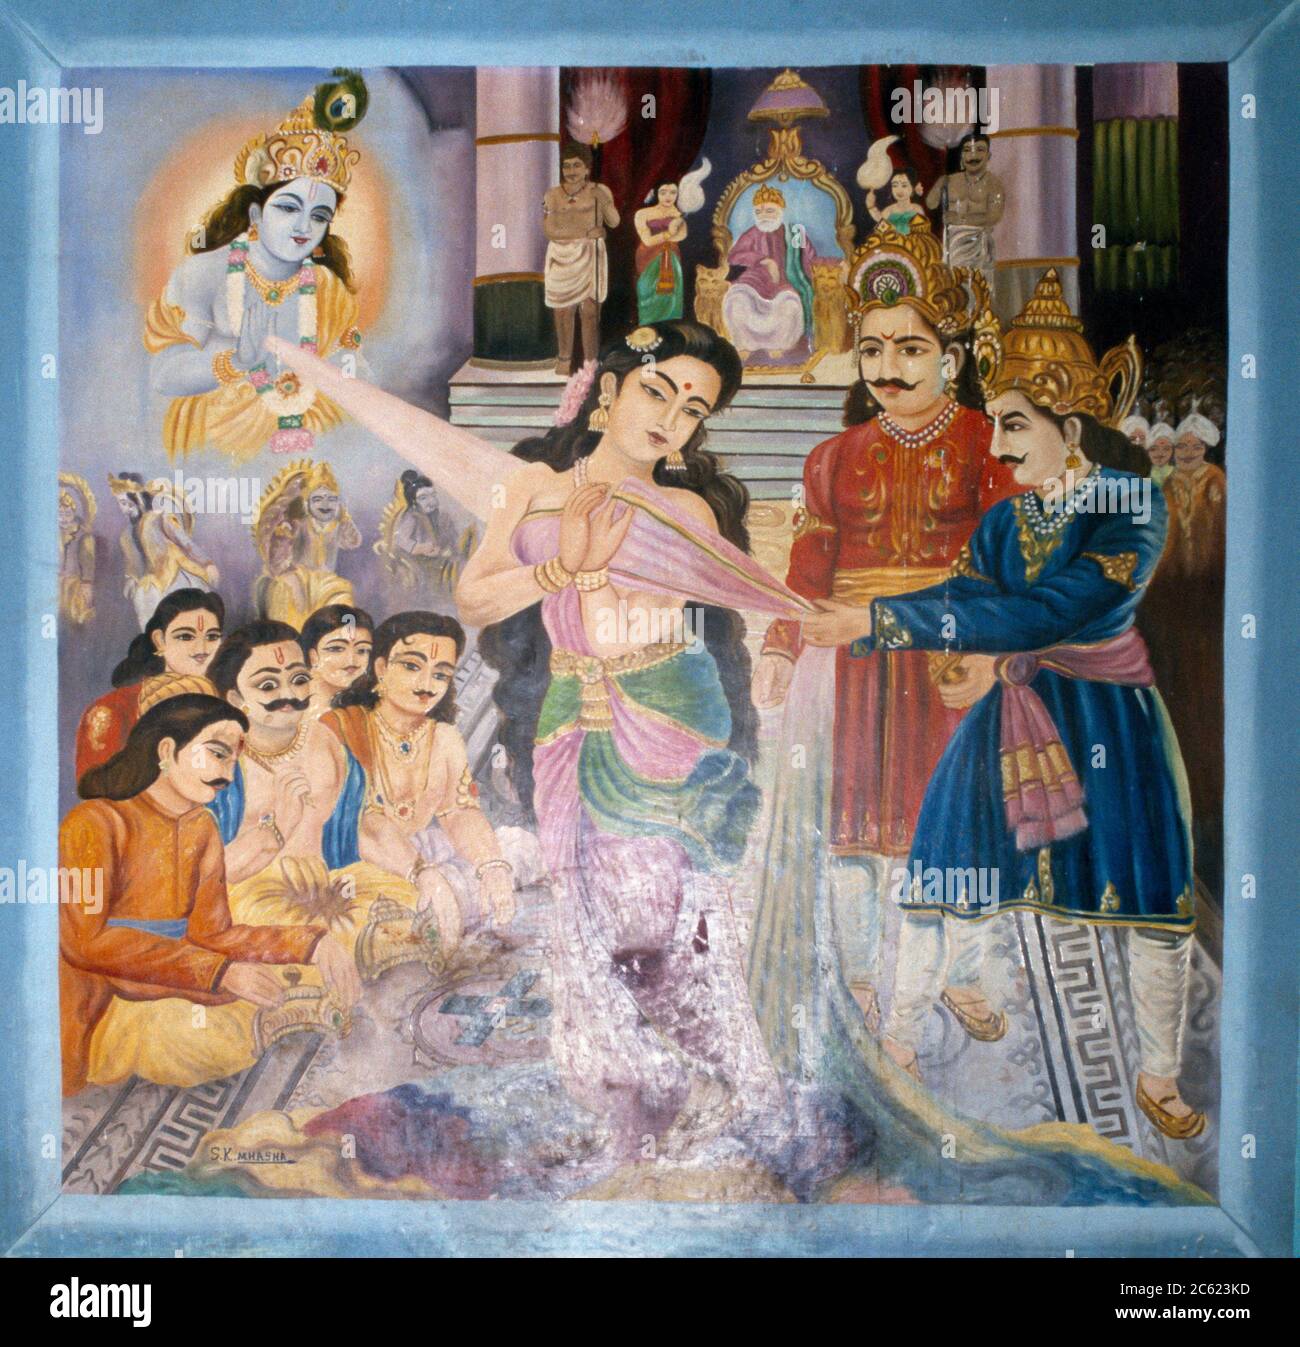 Amritsar India Langa Wali Devi Hindu Temple Painting Stock Photo